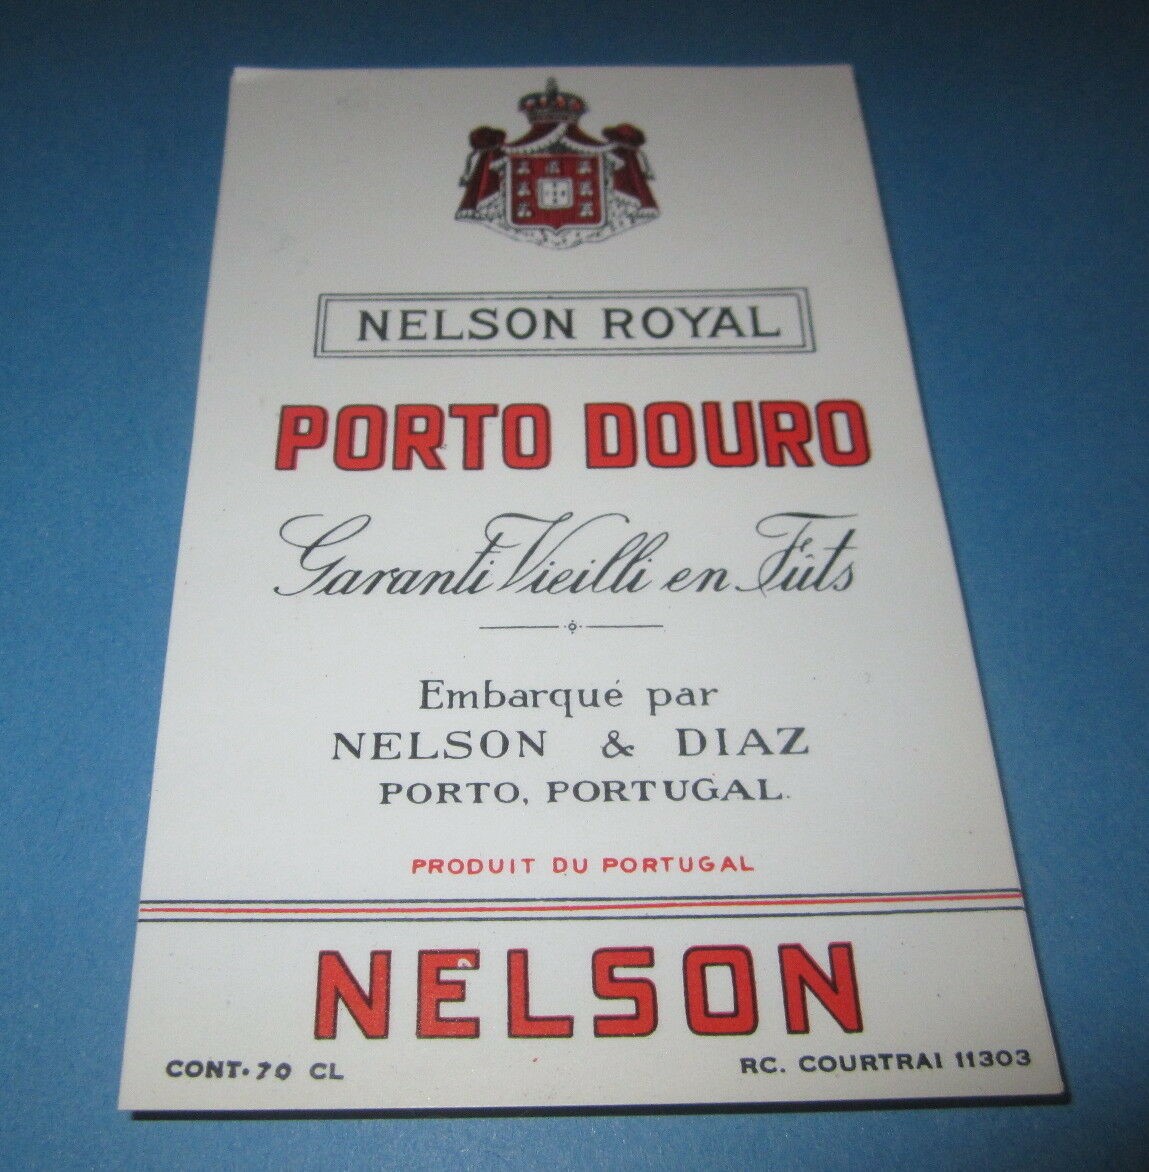  Lot of 100 Old Vintage Nelson Royal PORTO DOUR...